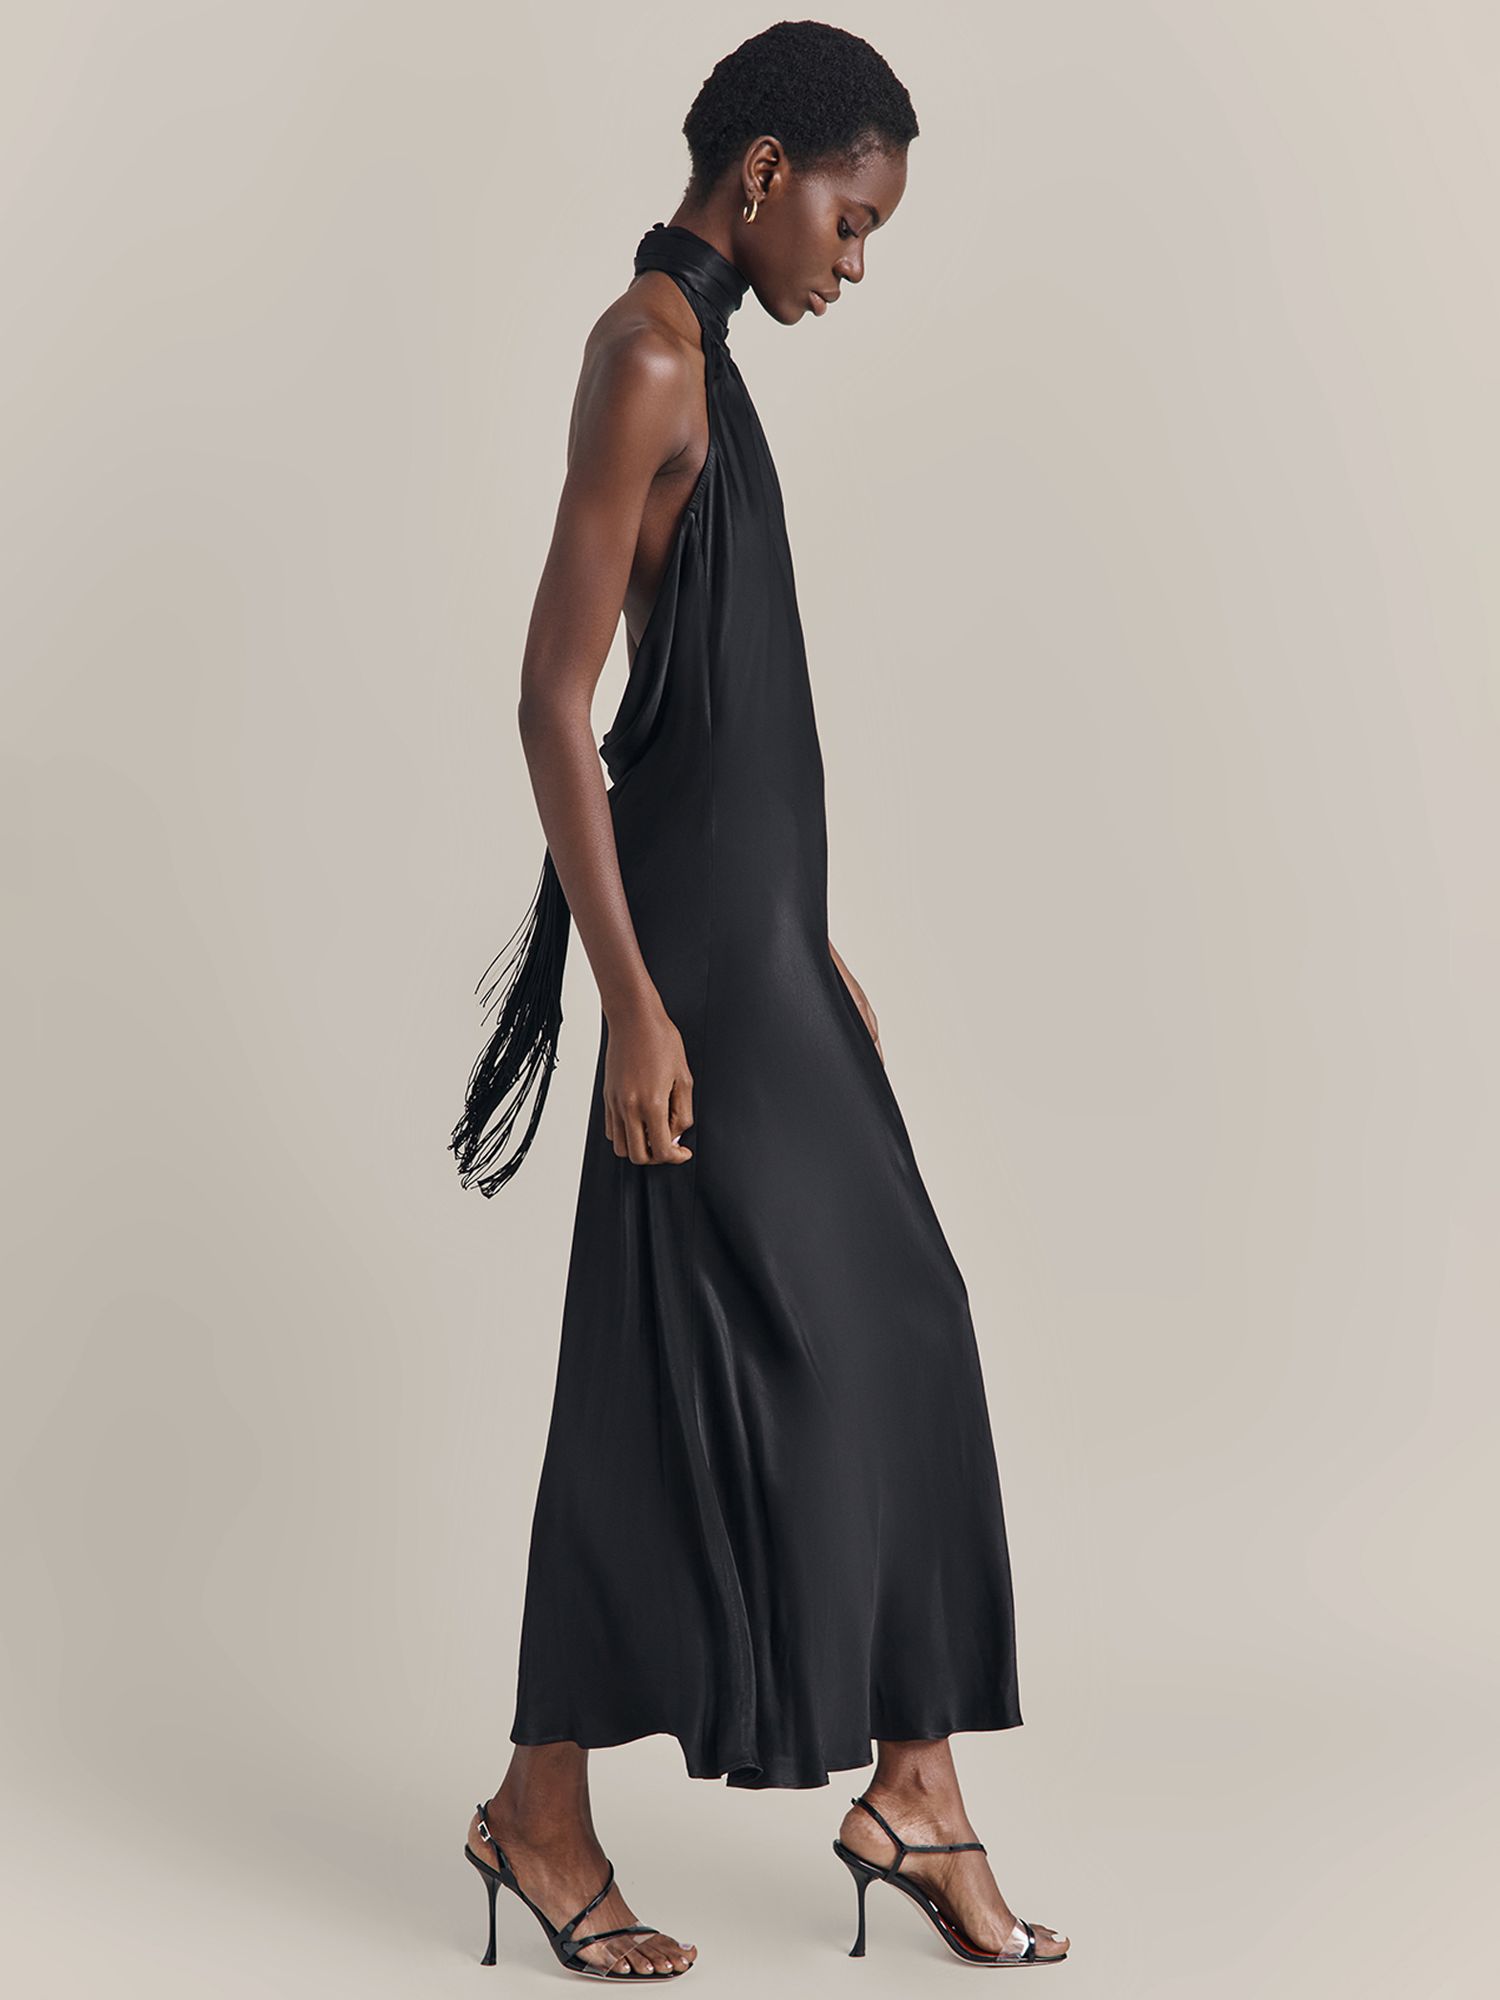 Ghost Florence Backless Halter Neck Midi Dress, Black, XS